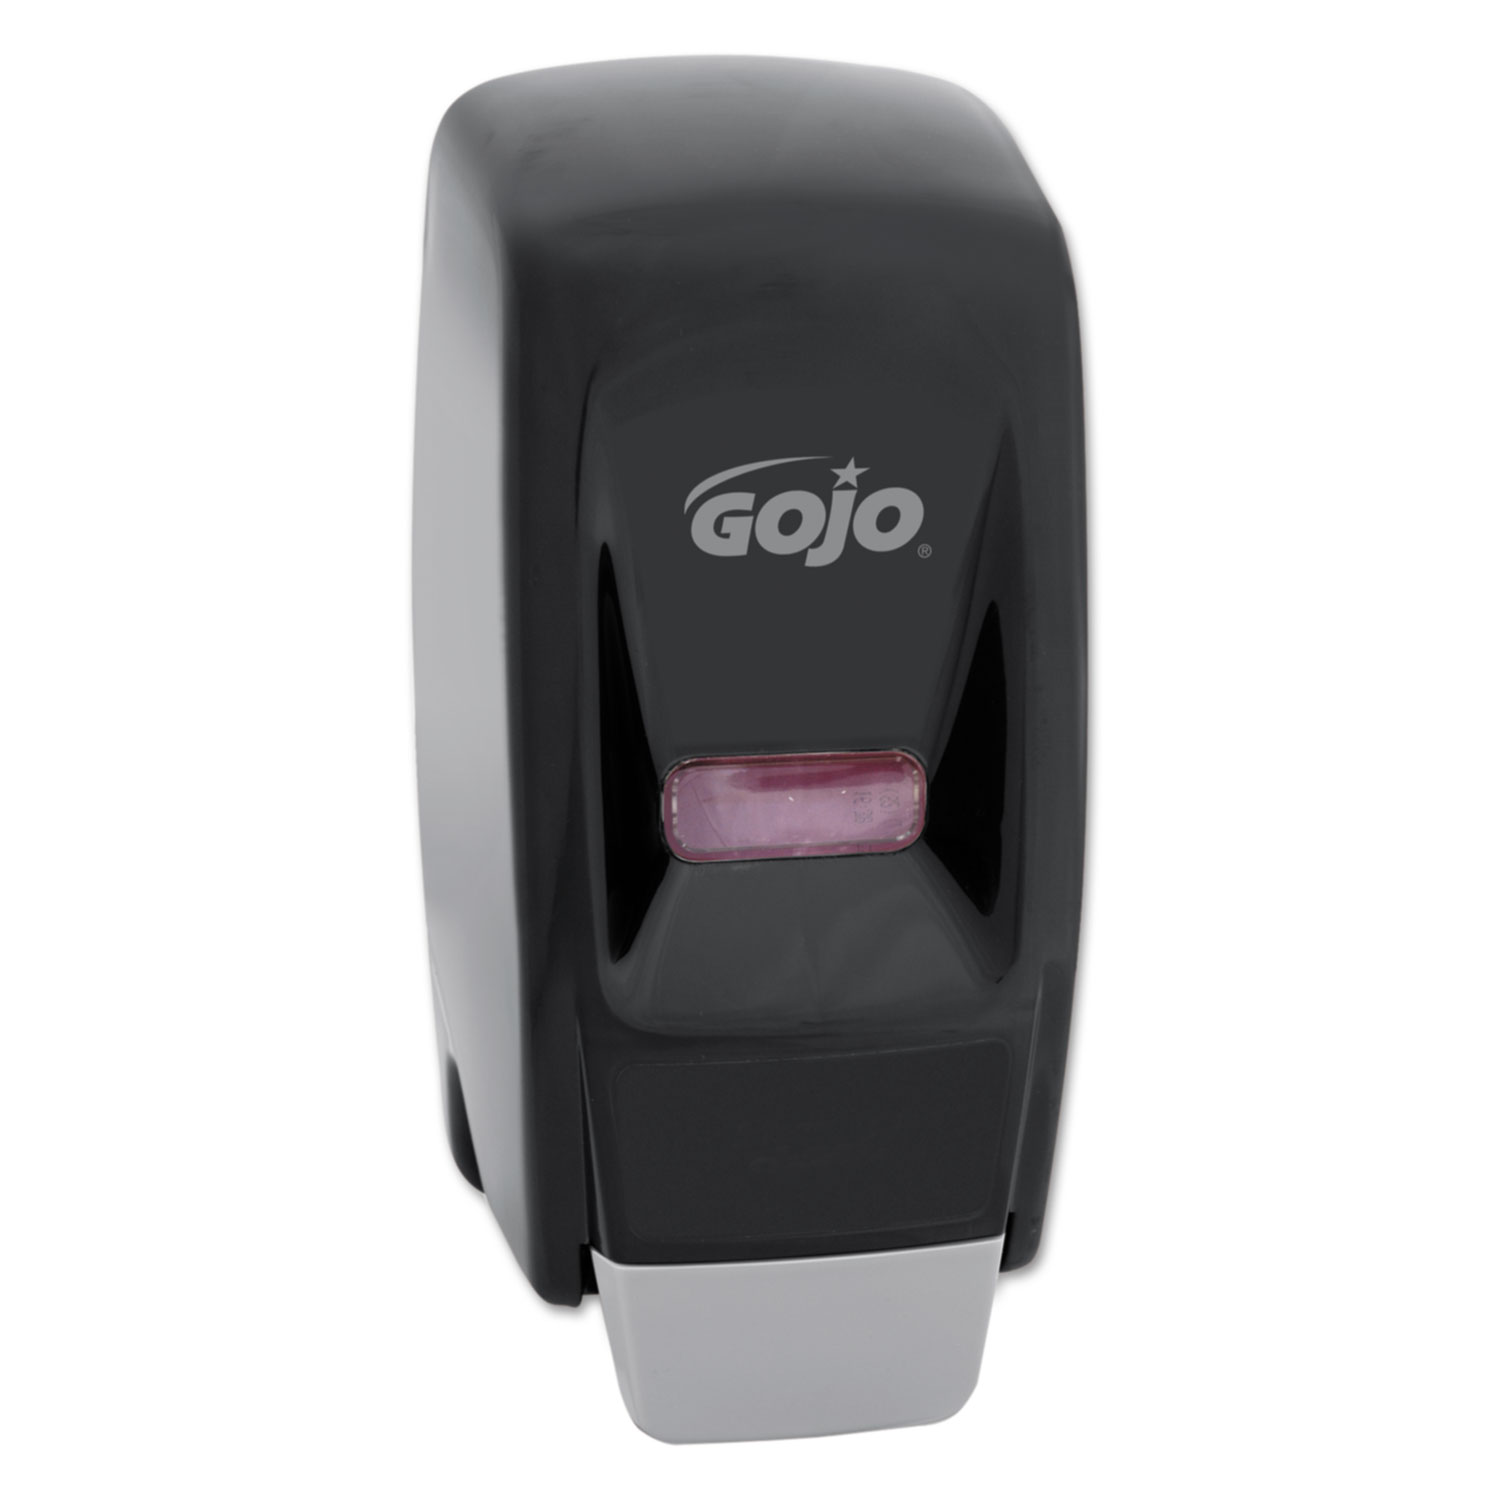  GOJO 9033-12 Bag-In-Box Liquid Soap Dispenser, 800 mL, 5.75 x 5.5 x 5.13, Black (GOJ9033) 